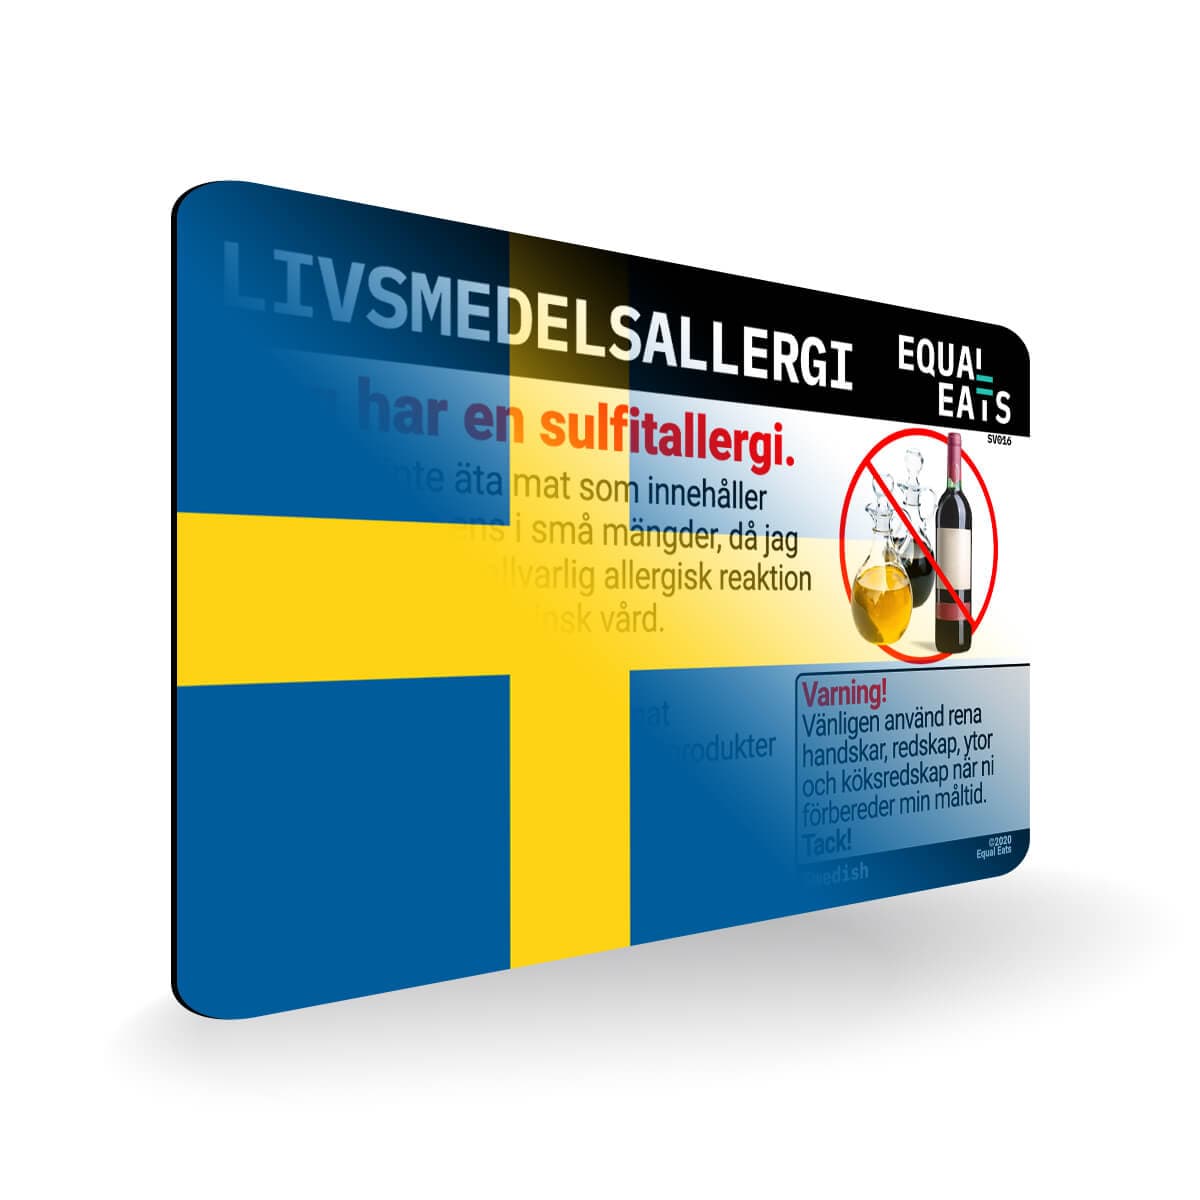 Sulfite Allergy in Swedish. Sulfite Allergy Card for Sweden